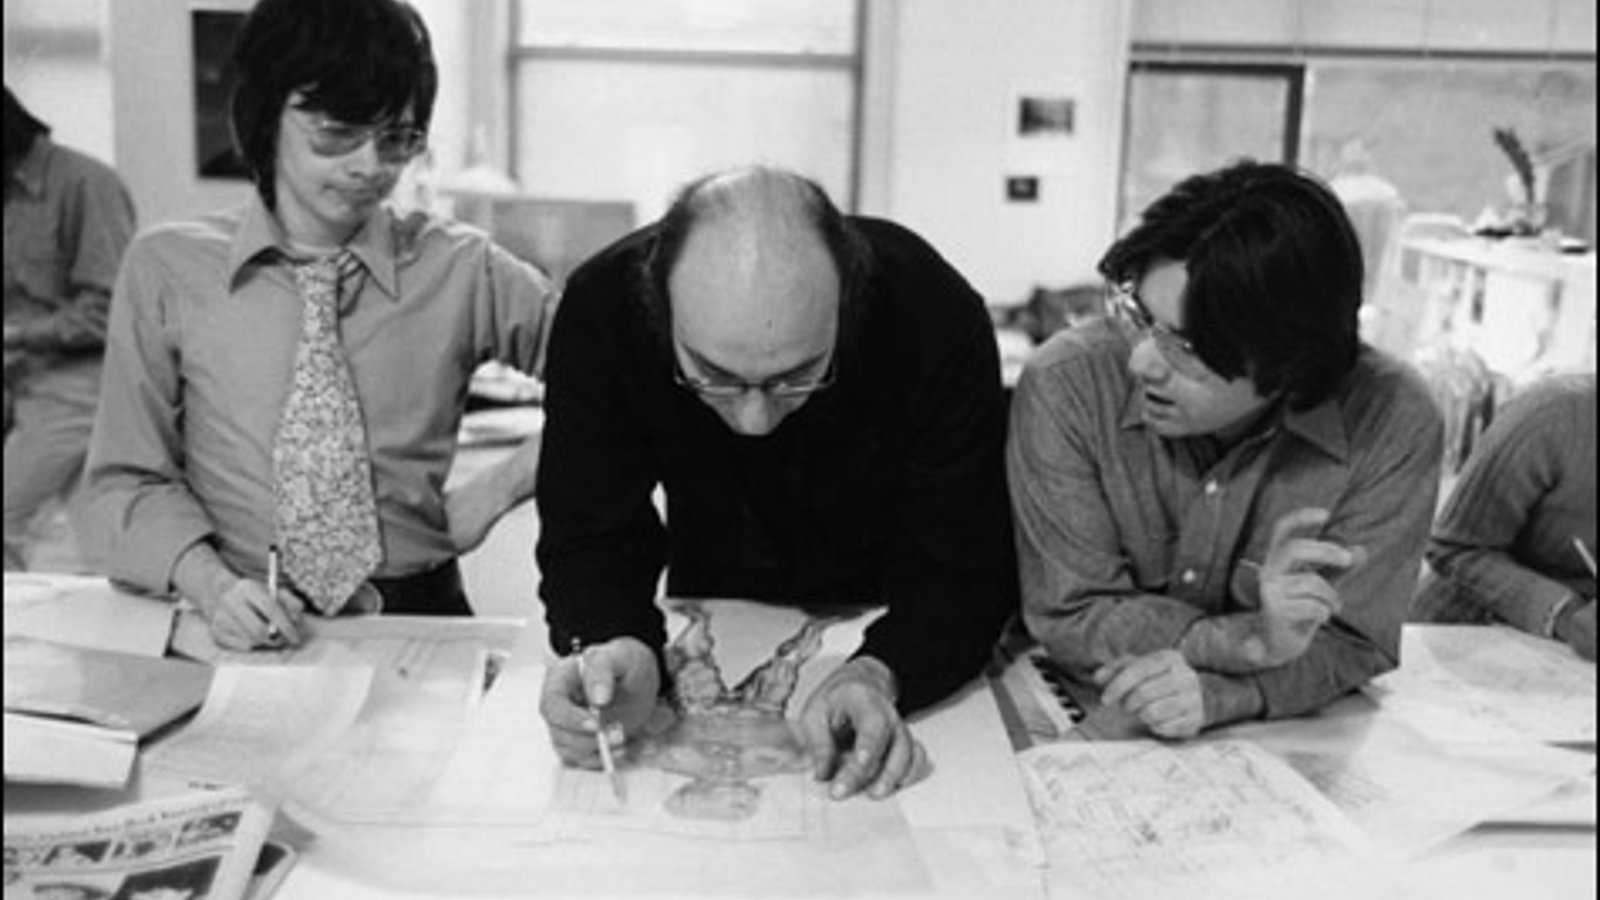 Milton Glaser: To Inform & Delight - An American Graphic Designer